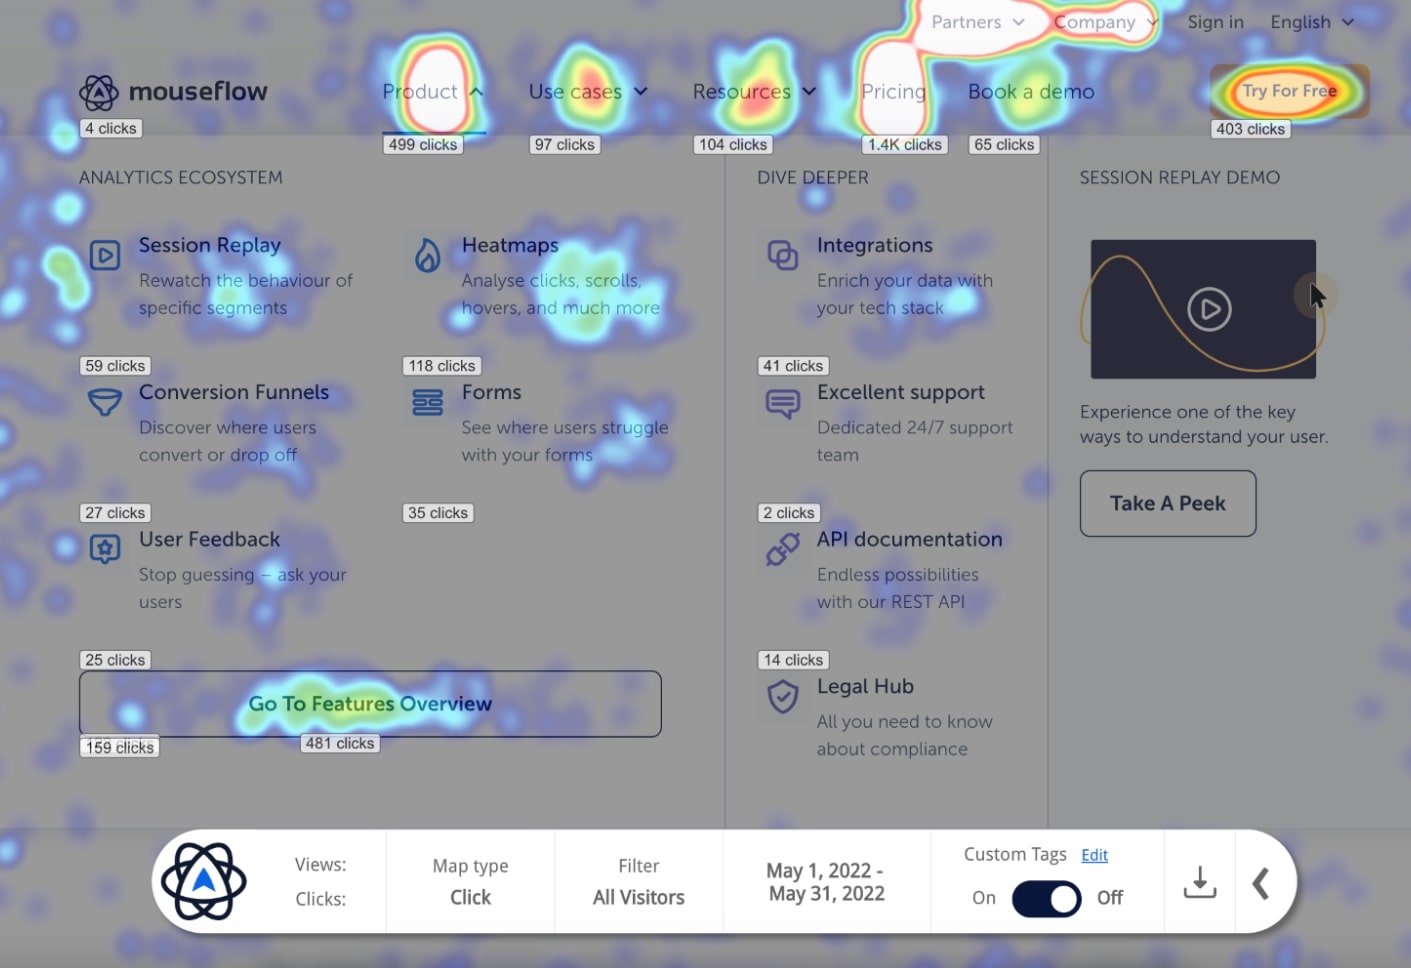 Mouseflow's heatmap monitoring user's behavior on screen